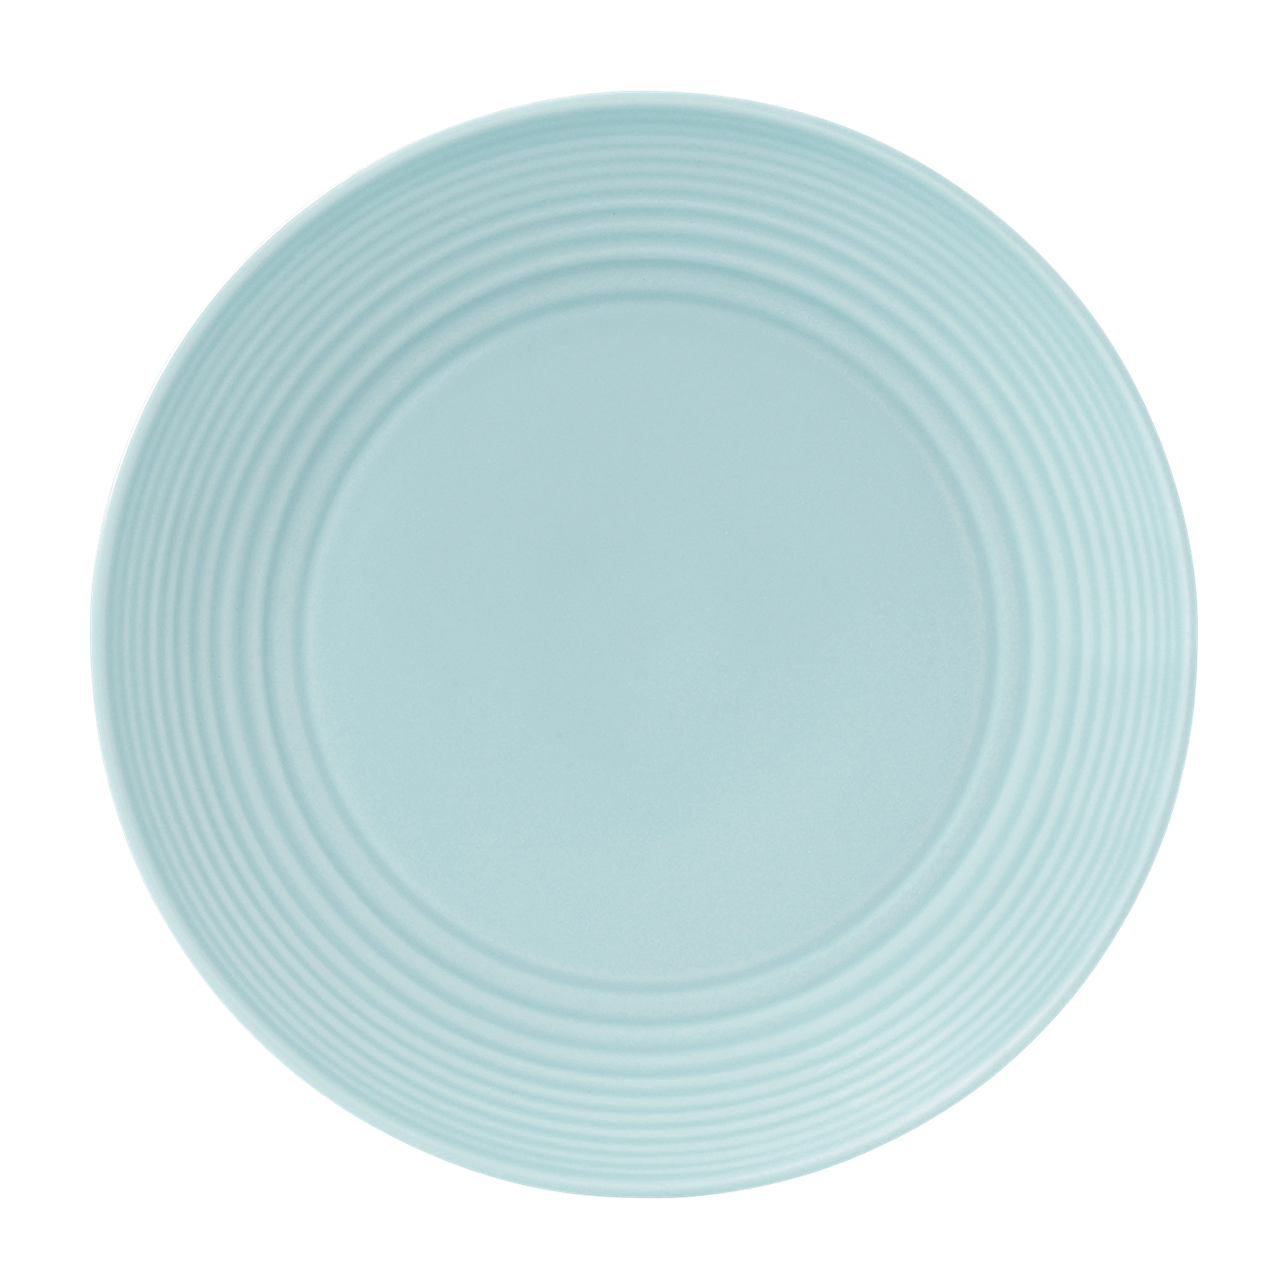 Maison Lipari Maze Salad Plate 8.8" - White  ROYAL DOULTON.